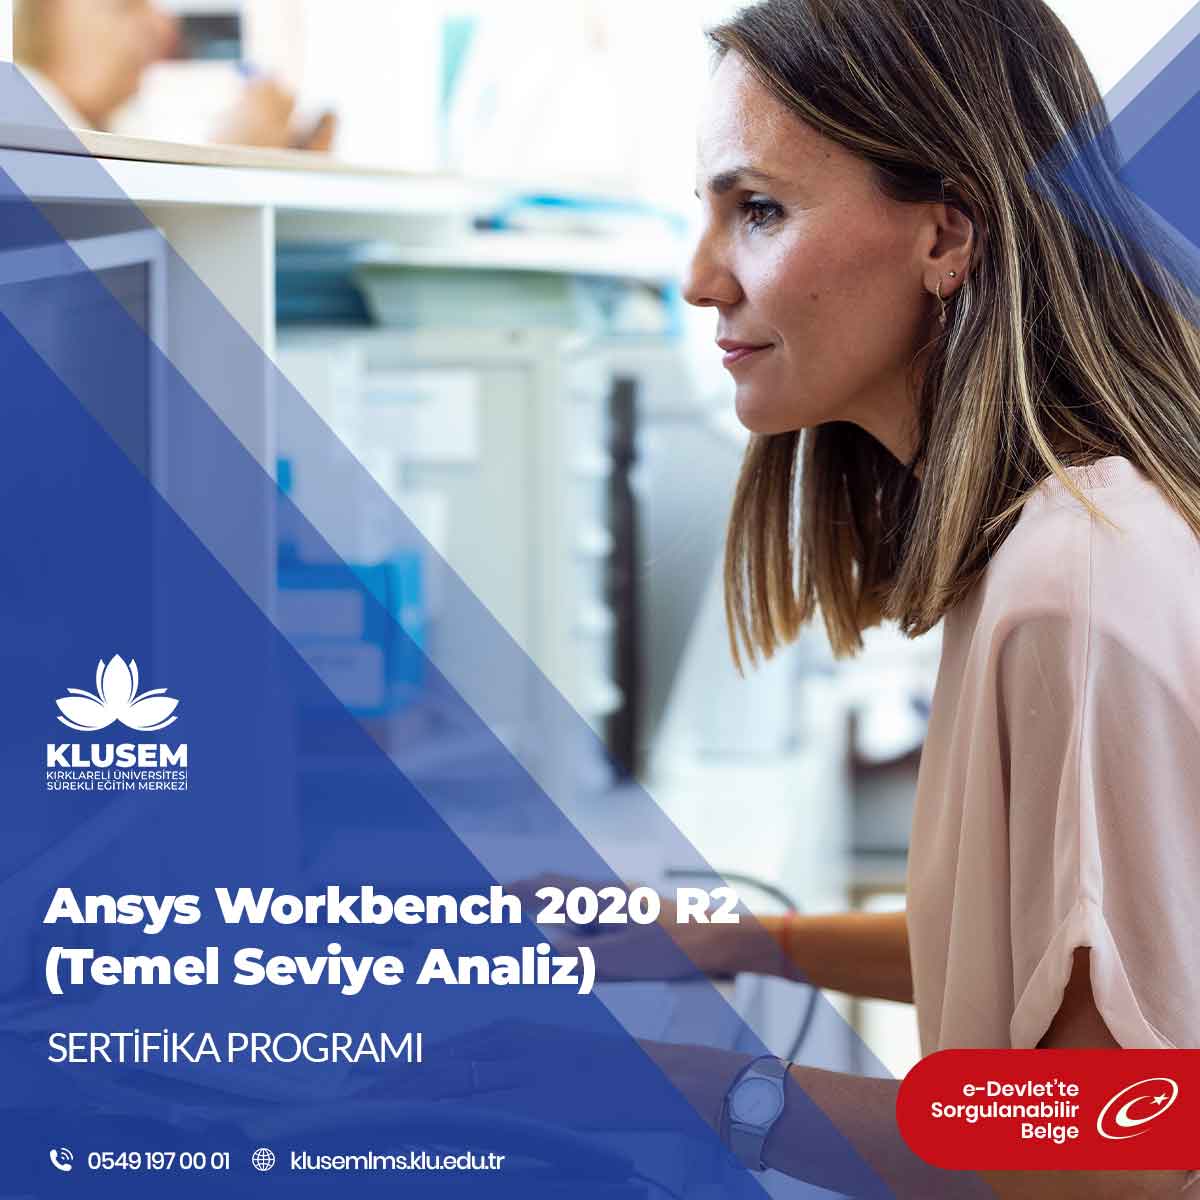 Ansys Workbench R2 ;Temel Seviye Analiz Eğitimi Sertifika Programı